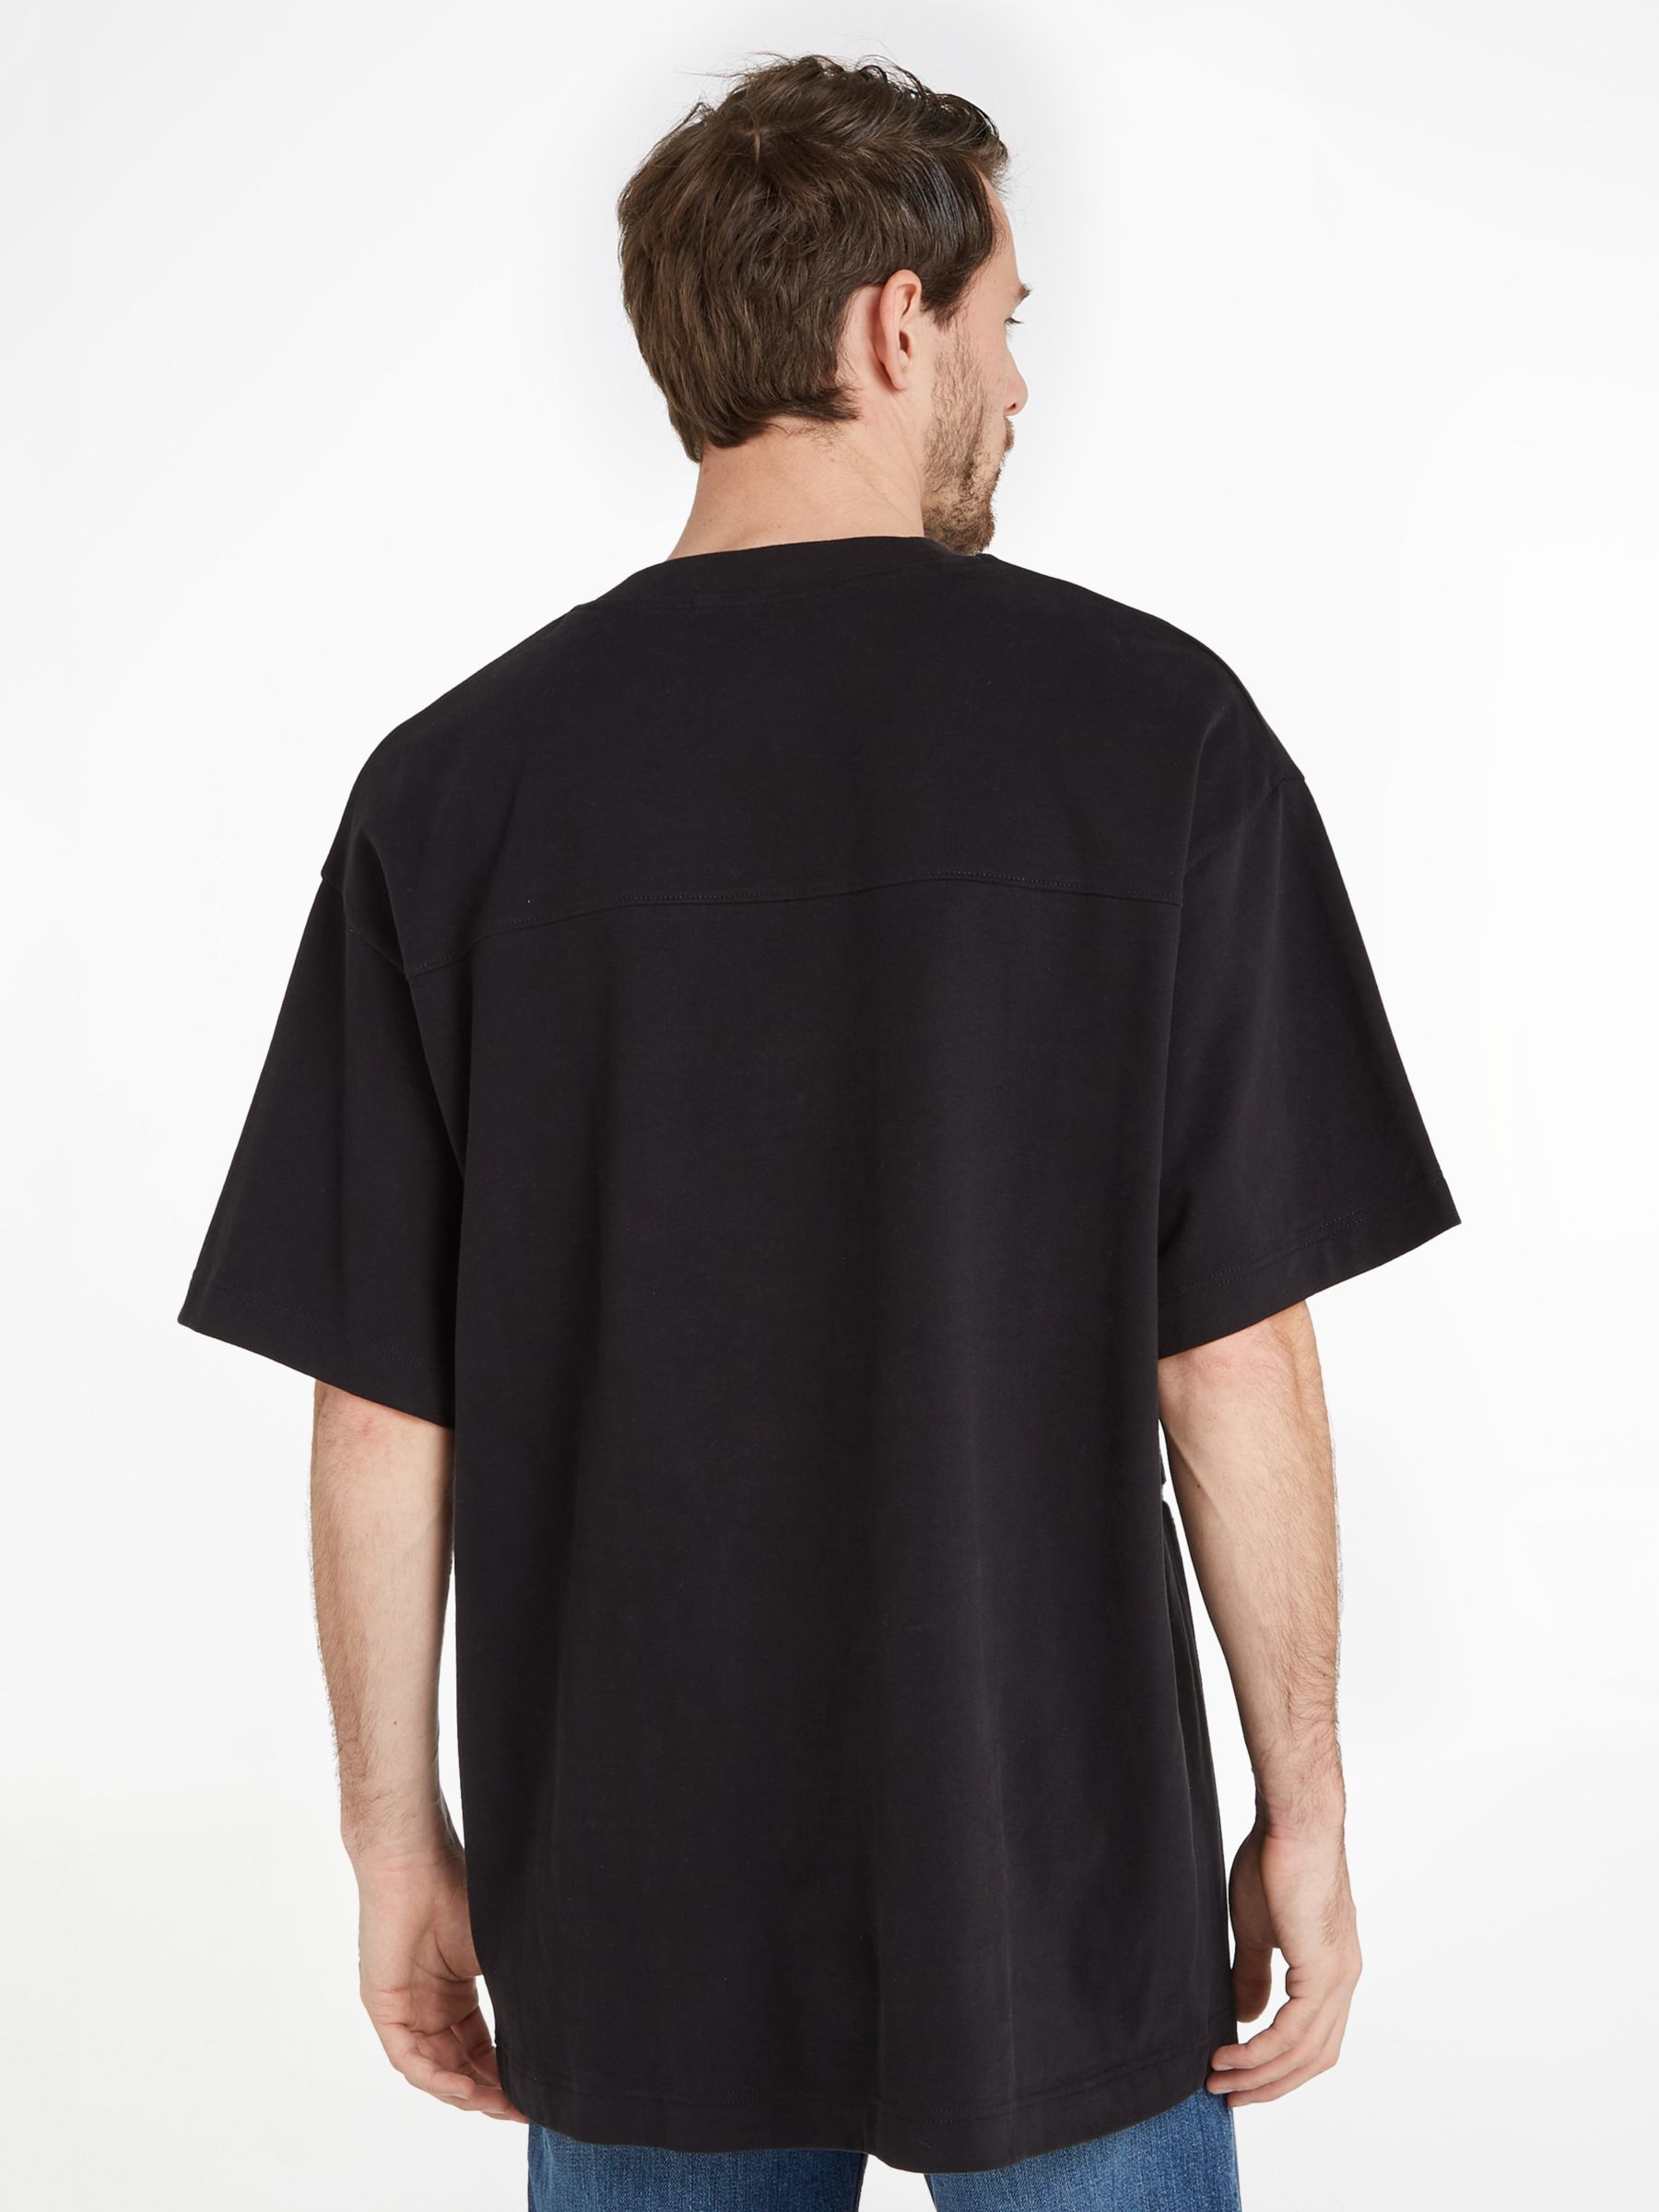 Calvin Klein Archive Logo T-Shirt, Black at John Lewis & Partners